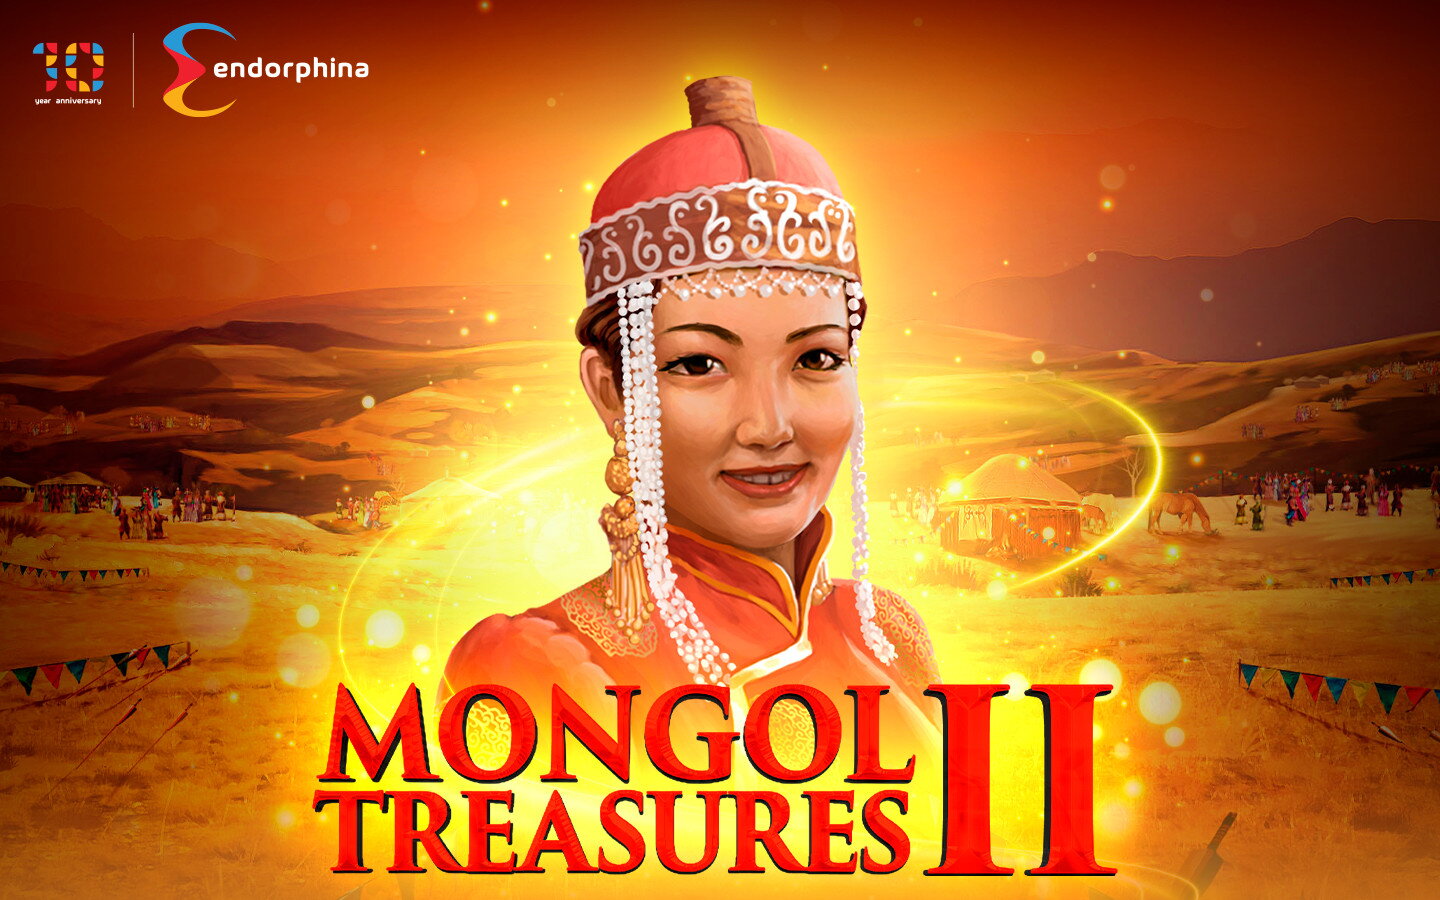 Mongol Treasures 2